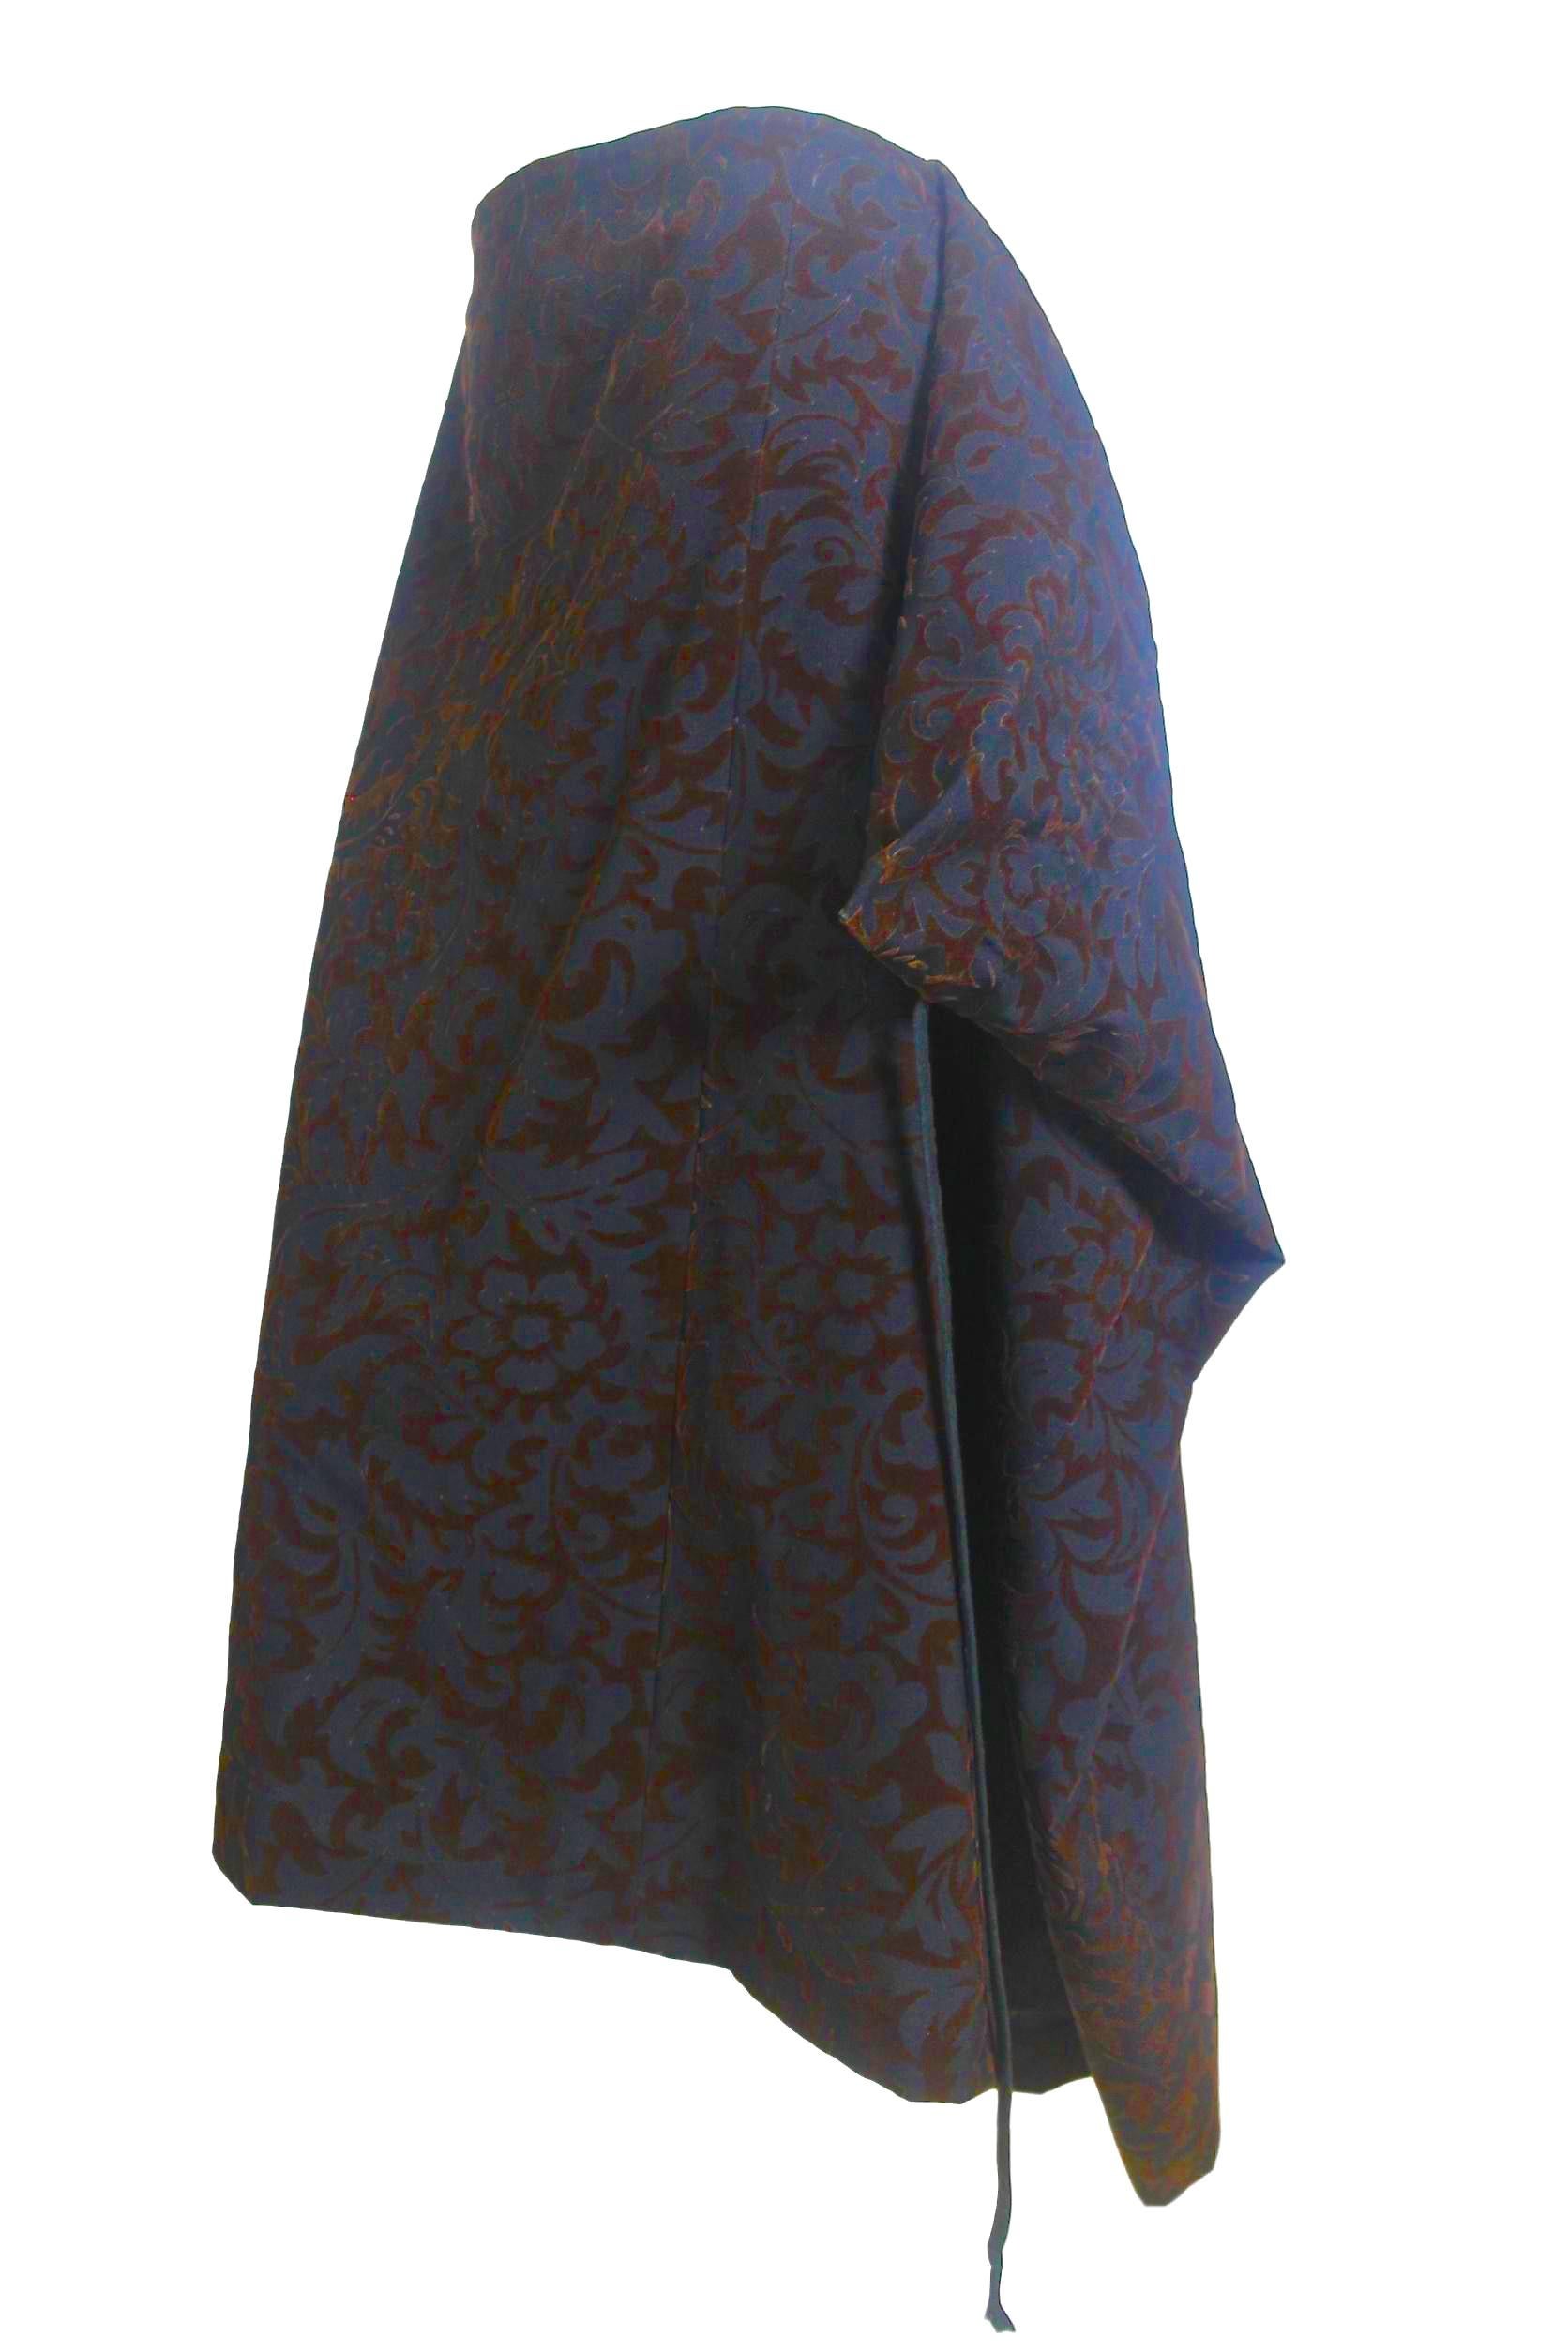 Women's Comme des Garcons Flat Envelope Wool Skirt AD 1996 For Sale